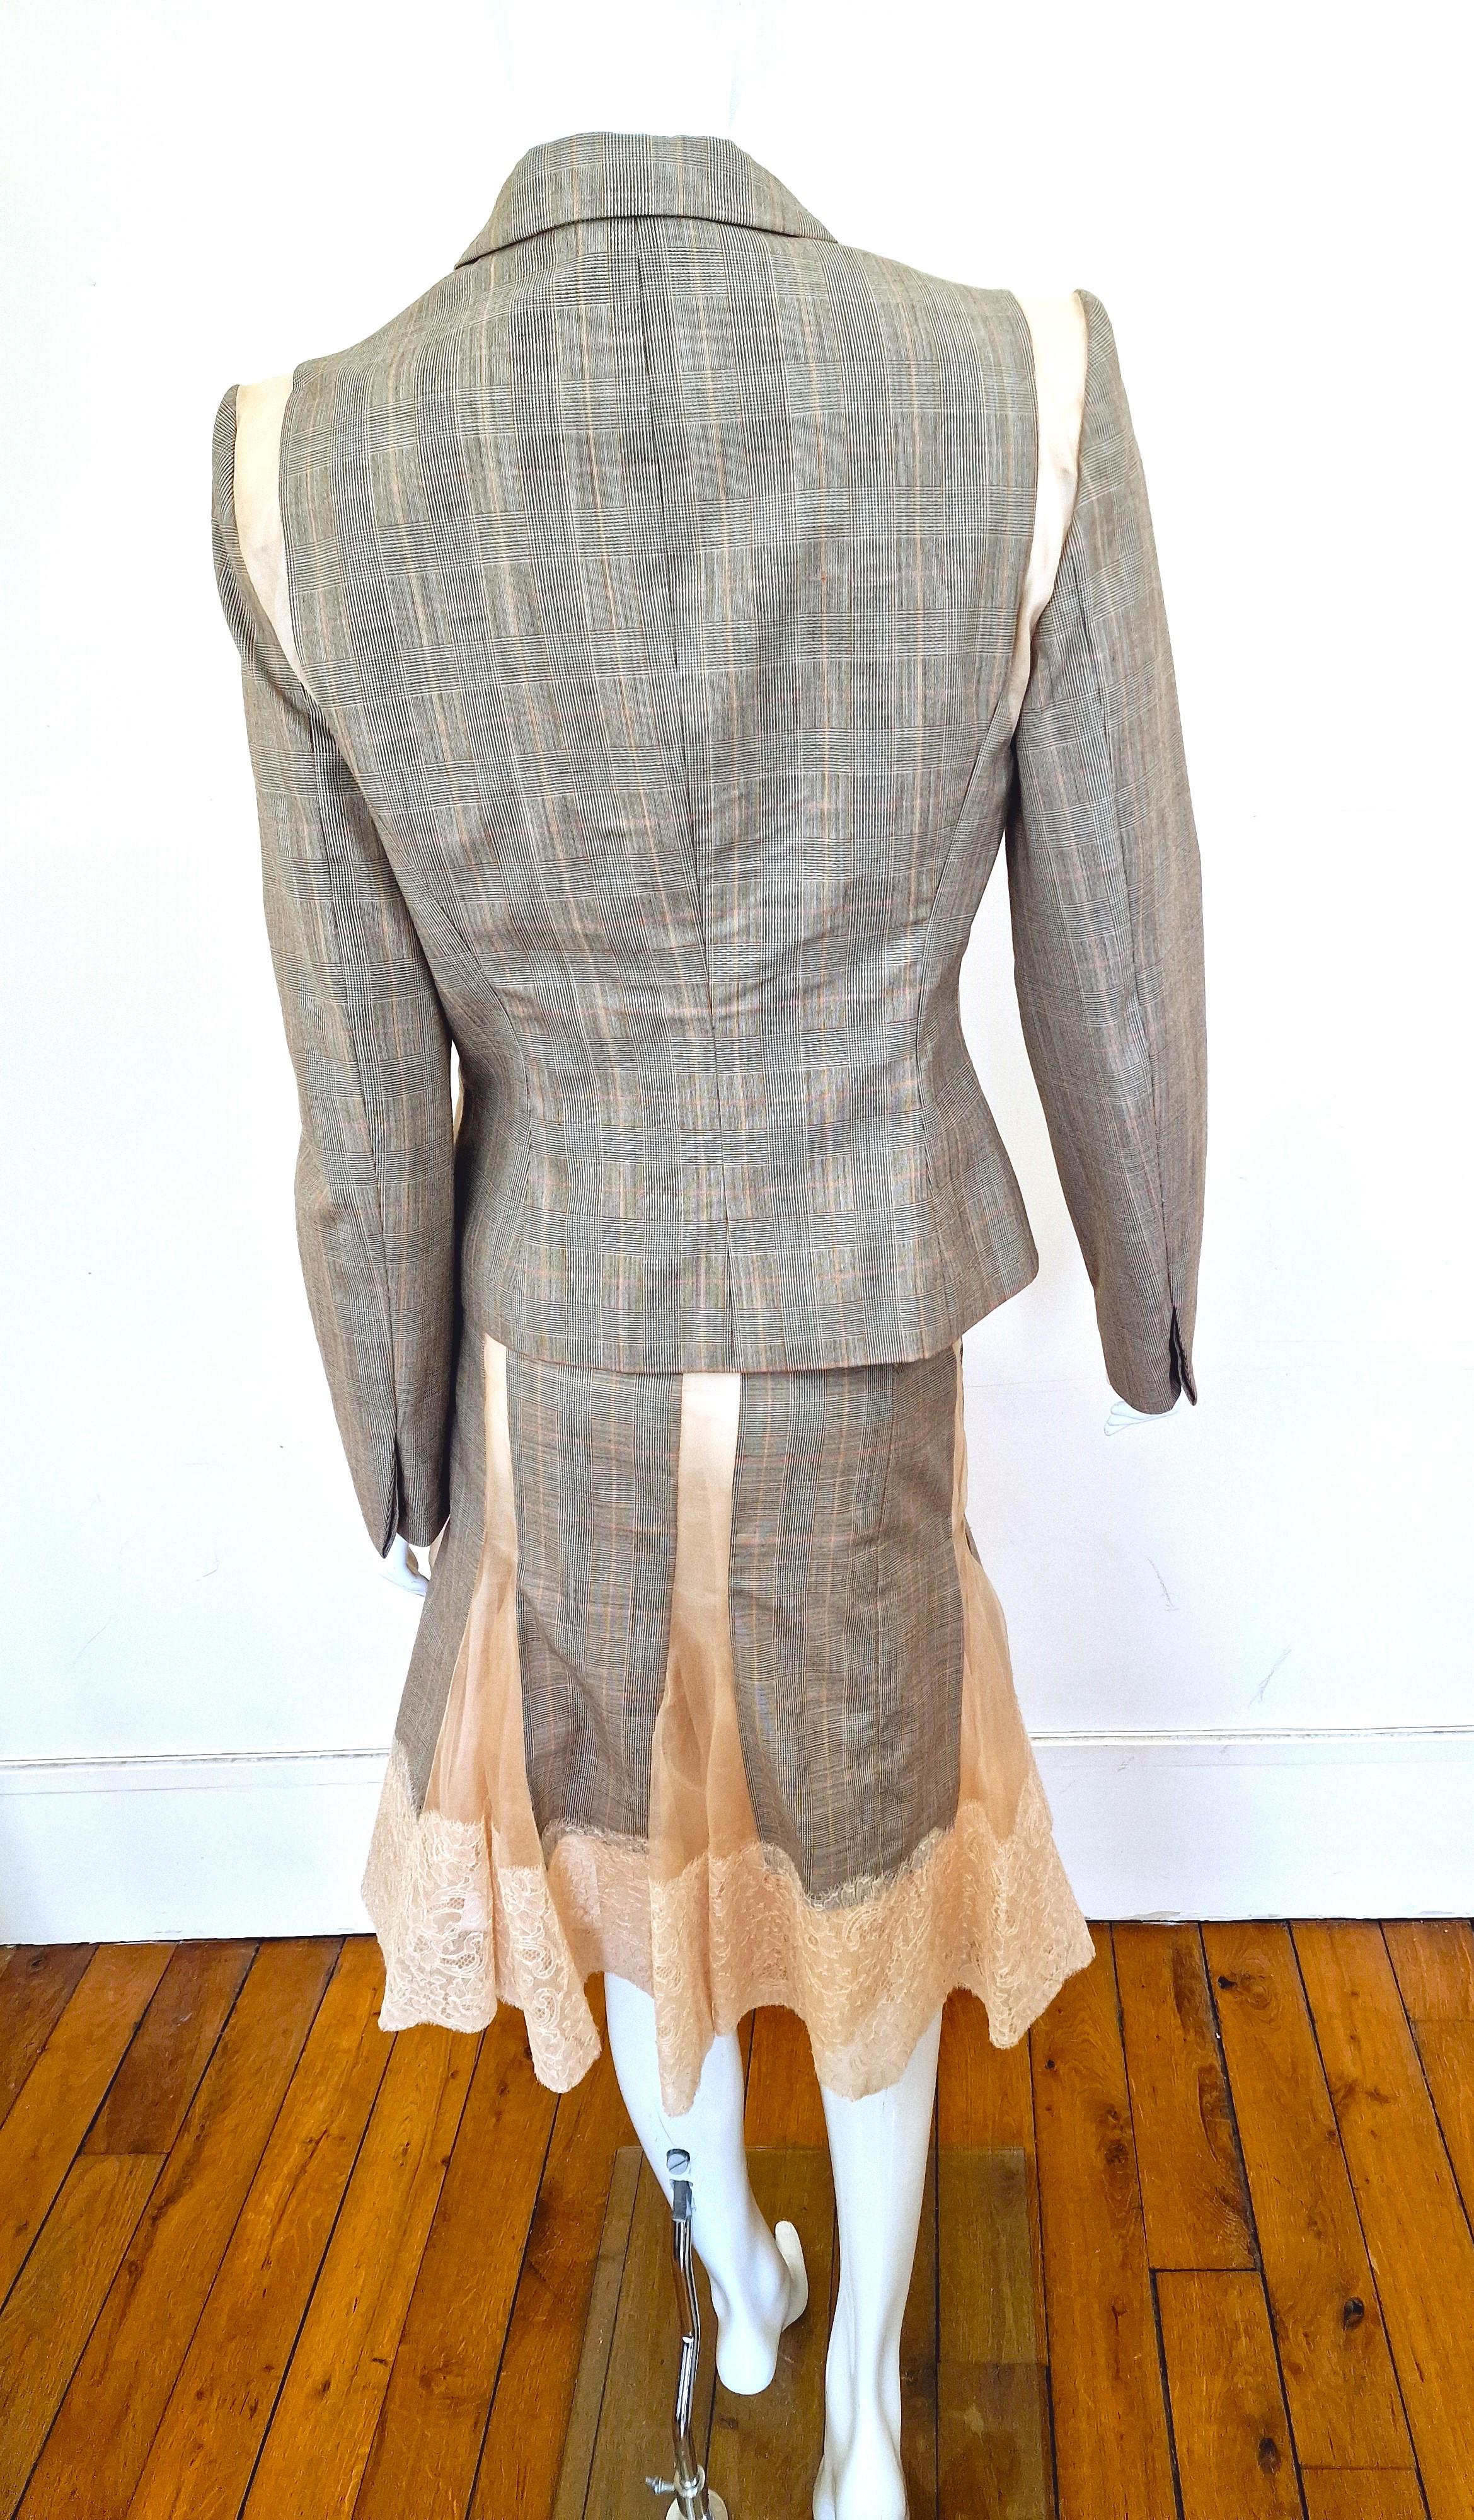 Alexander McQueen Deliverance 2004 S/S Runway Large Check Suit Skirt Dress For Sale 10